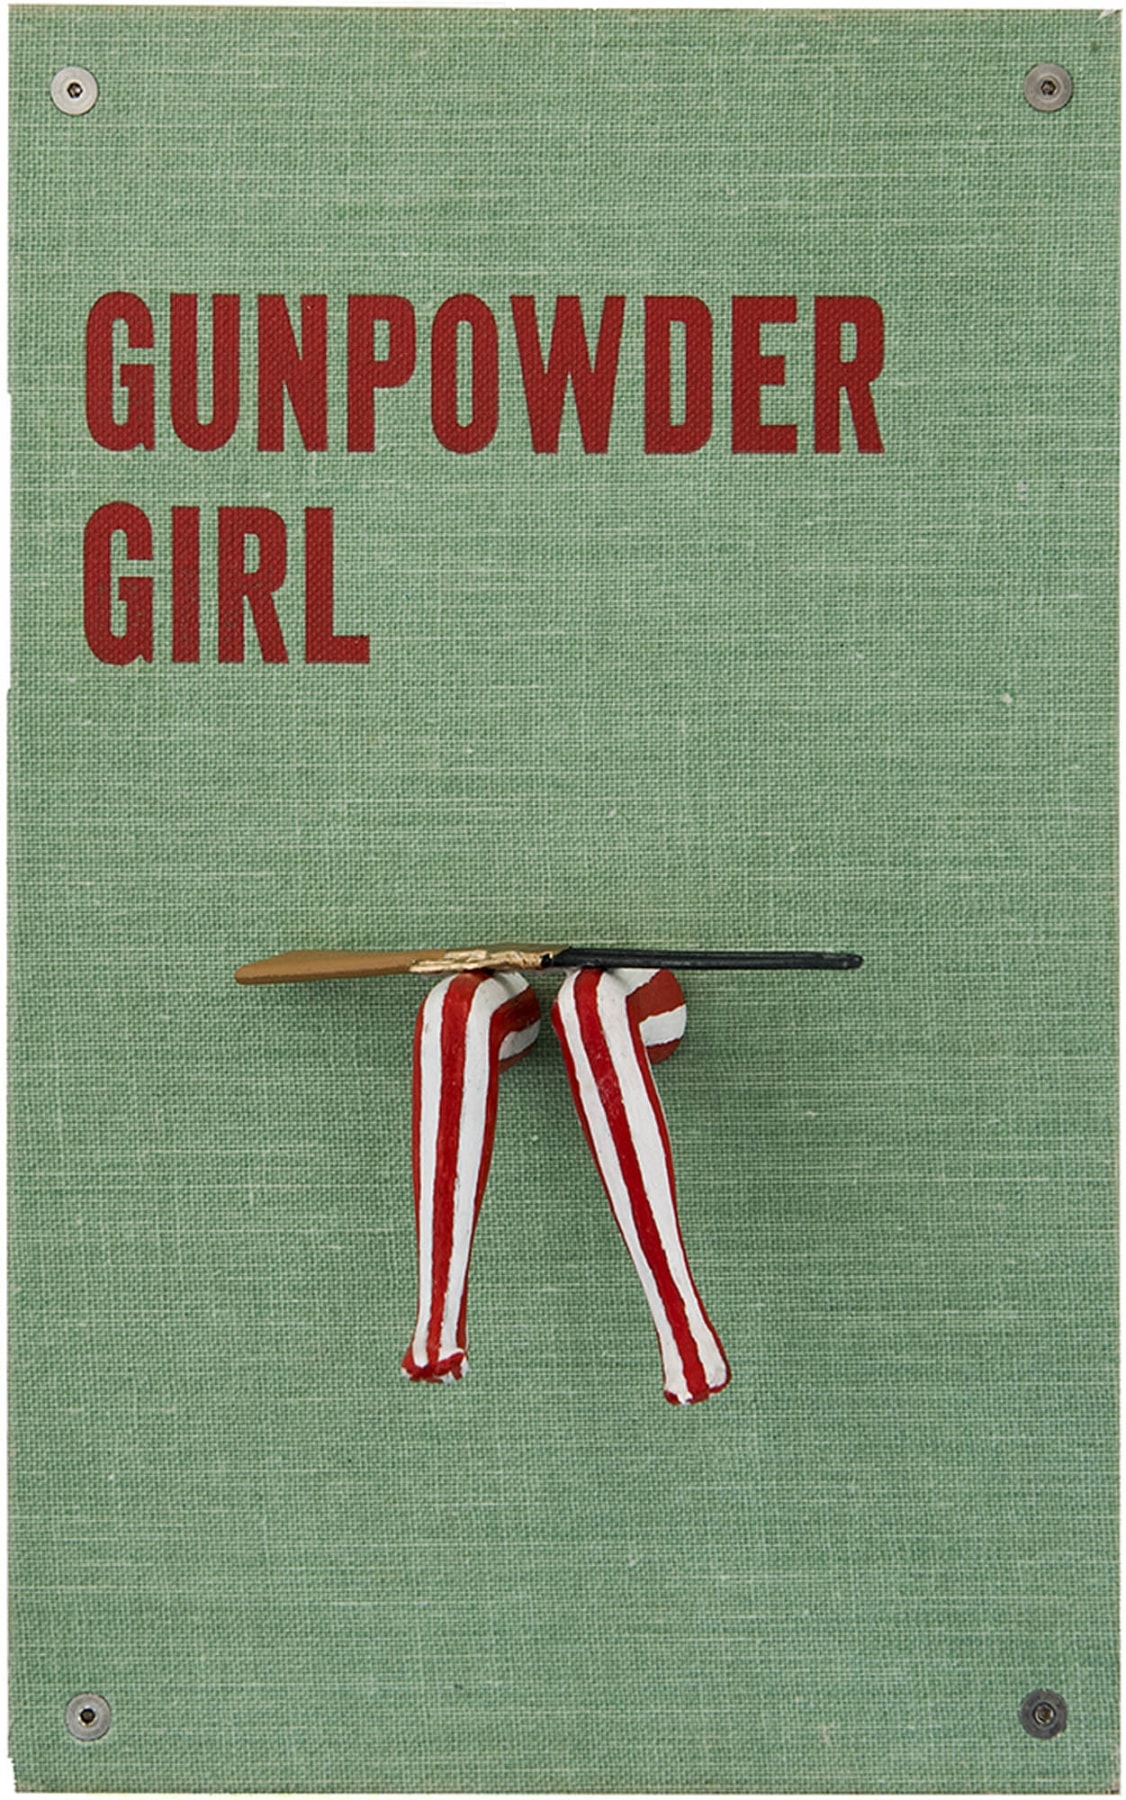 Nancy Gifford, Gunpowder Girl - #metoo Series, 2017